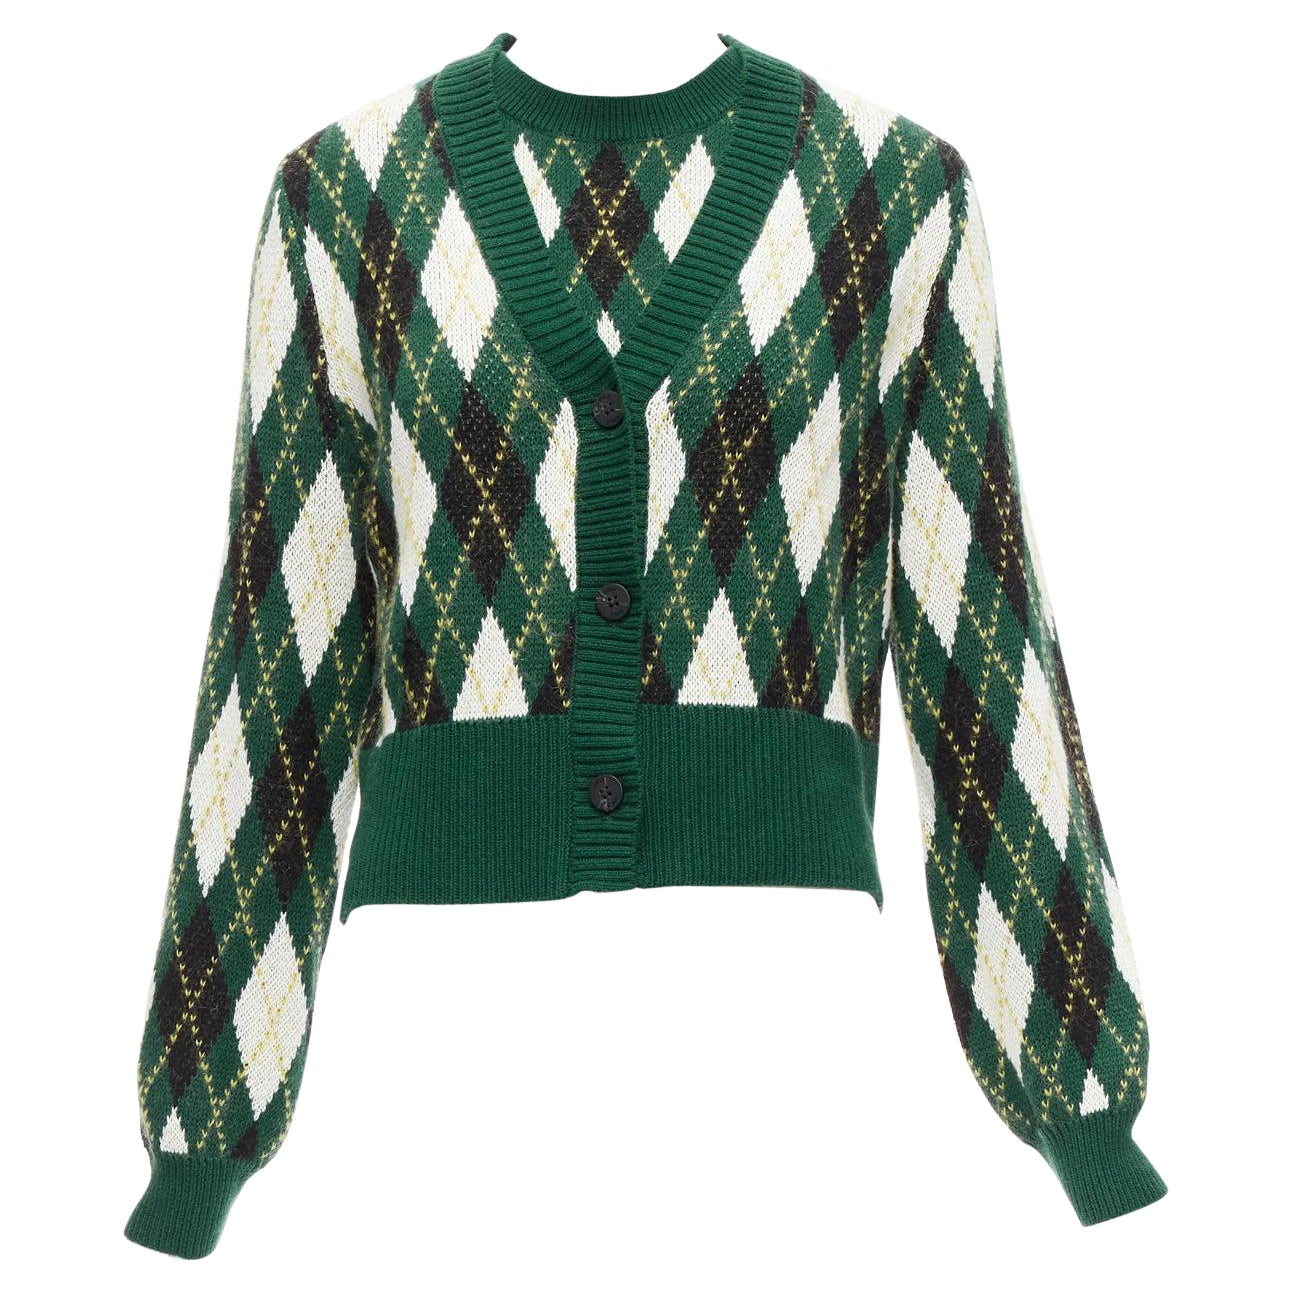 STAUD Knave green black Argyle cotton wool sweater vest cardigan twin set XS For Sale